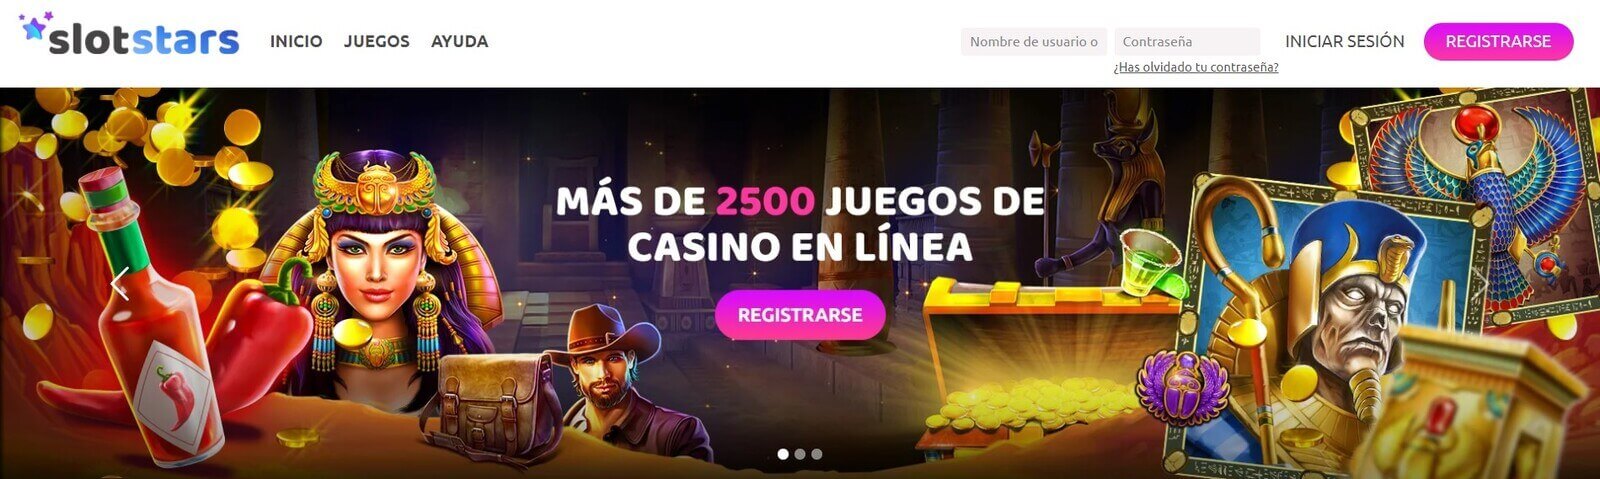 Página web de SlotStars casino